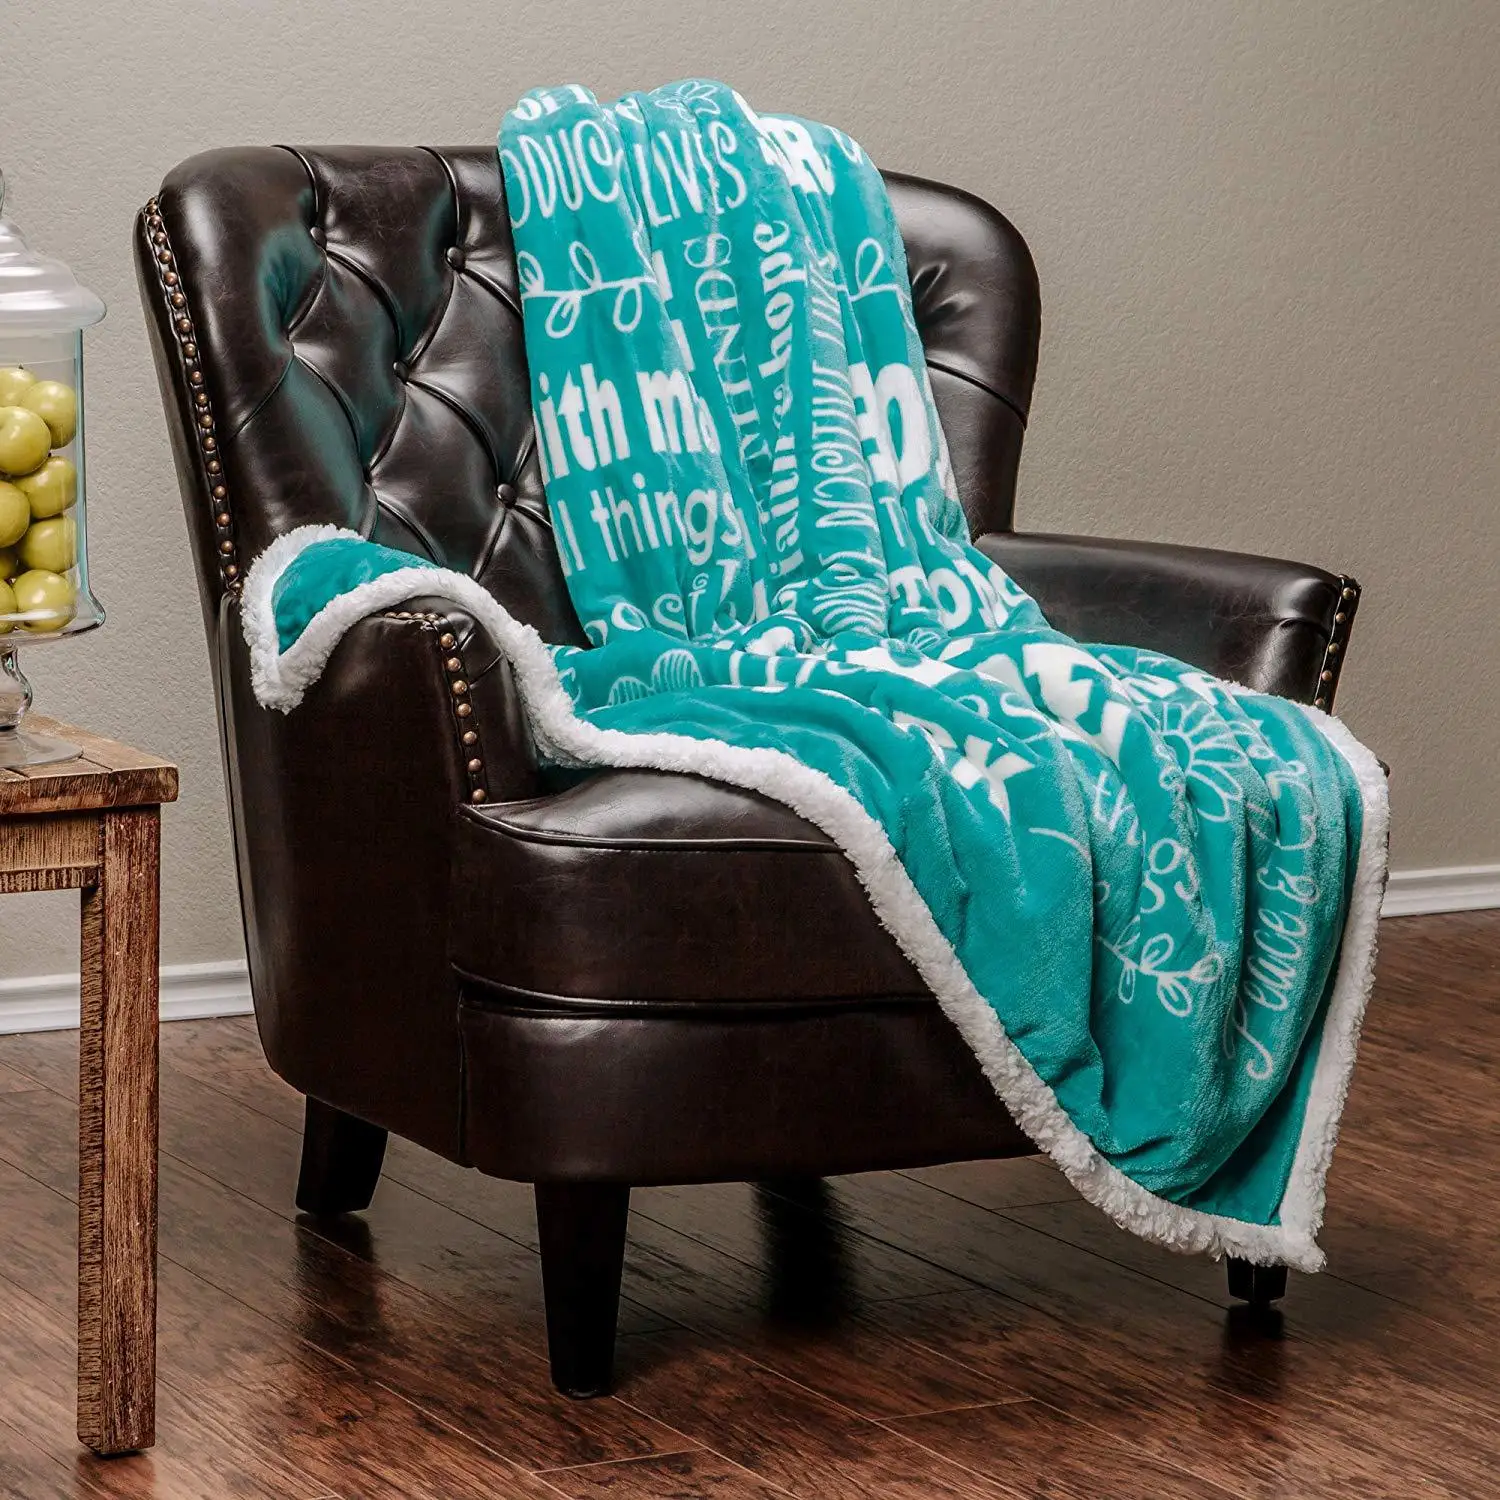 Customize Blanket 3D Printed Plush Warm Custom Blankets Fleece Throw Super Soft Cozy Blanket